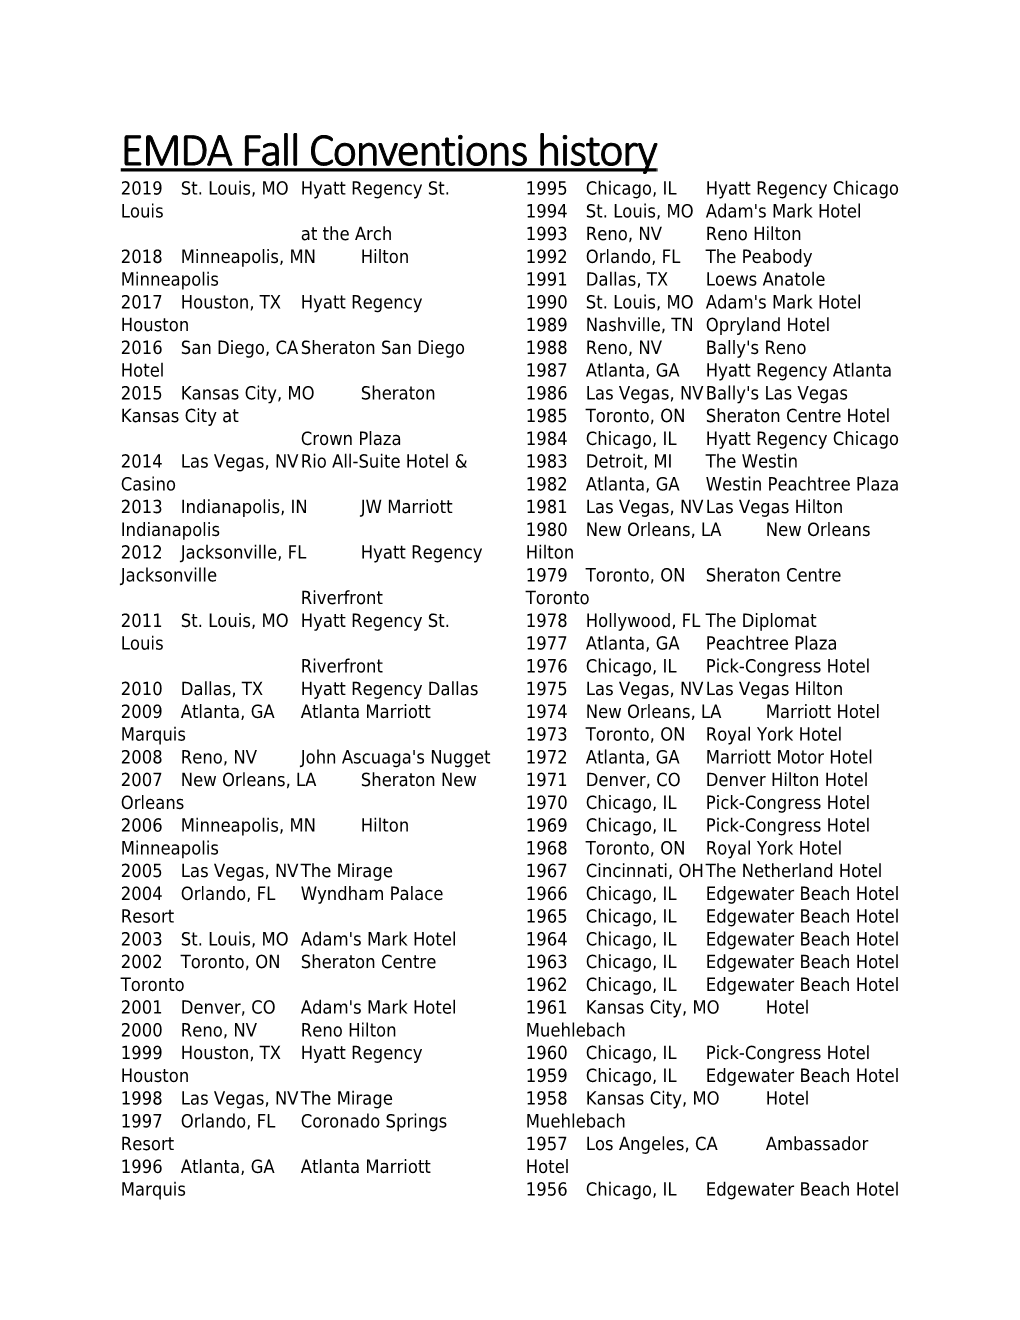 EMDA Fall Conventions History